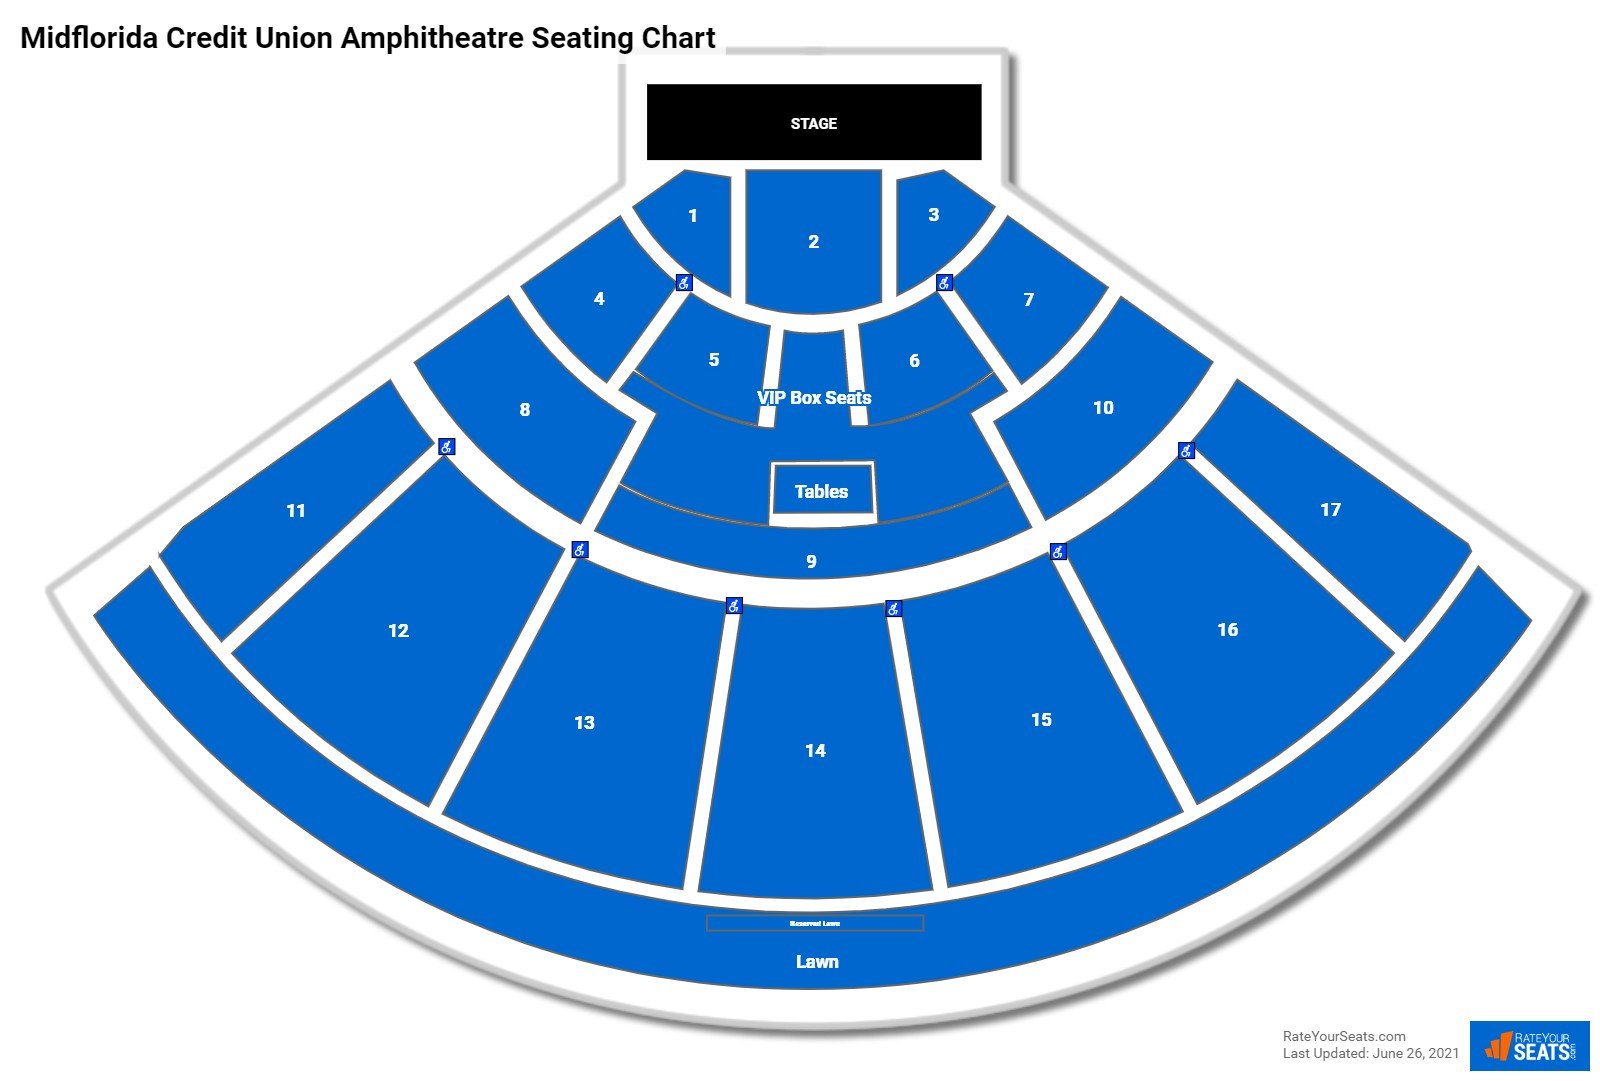 Midflorida Credit Union Amphitheatre Concert Seating Chart